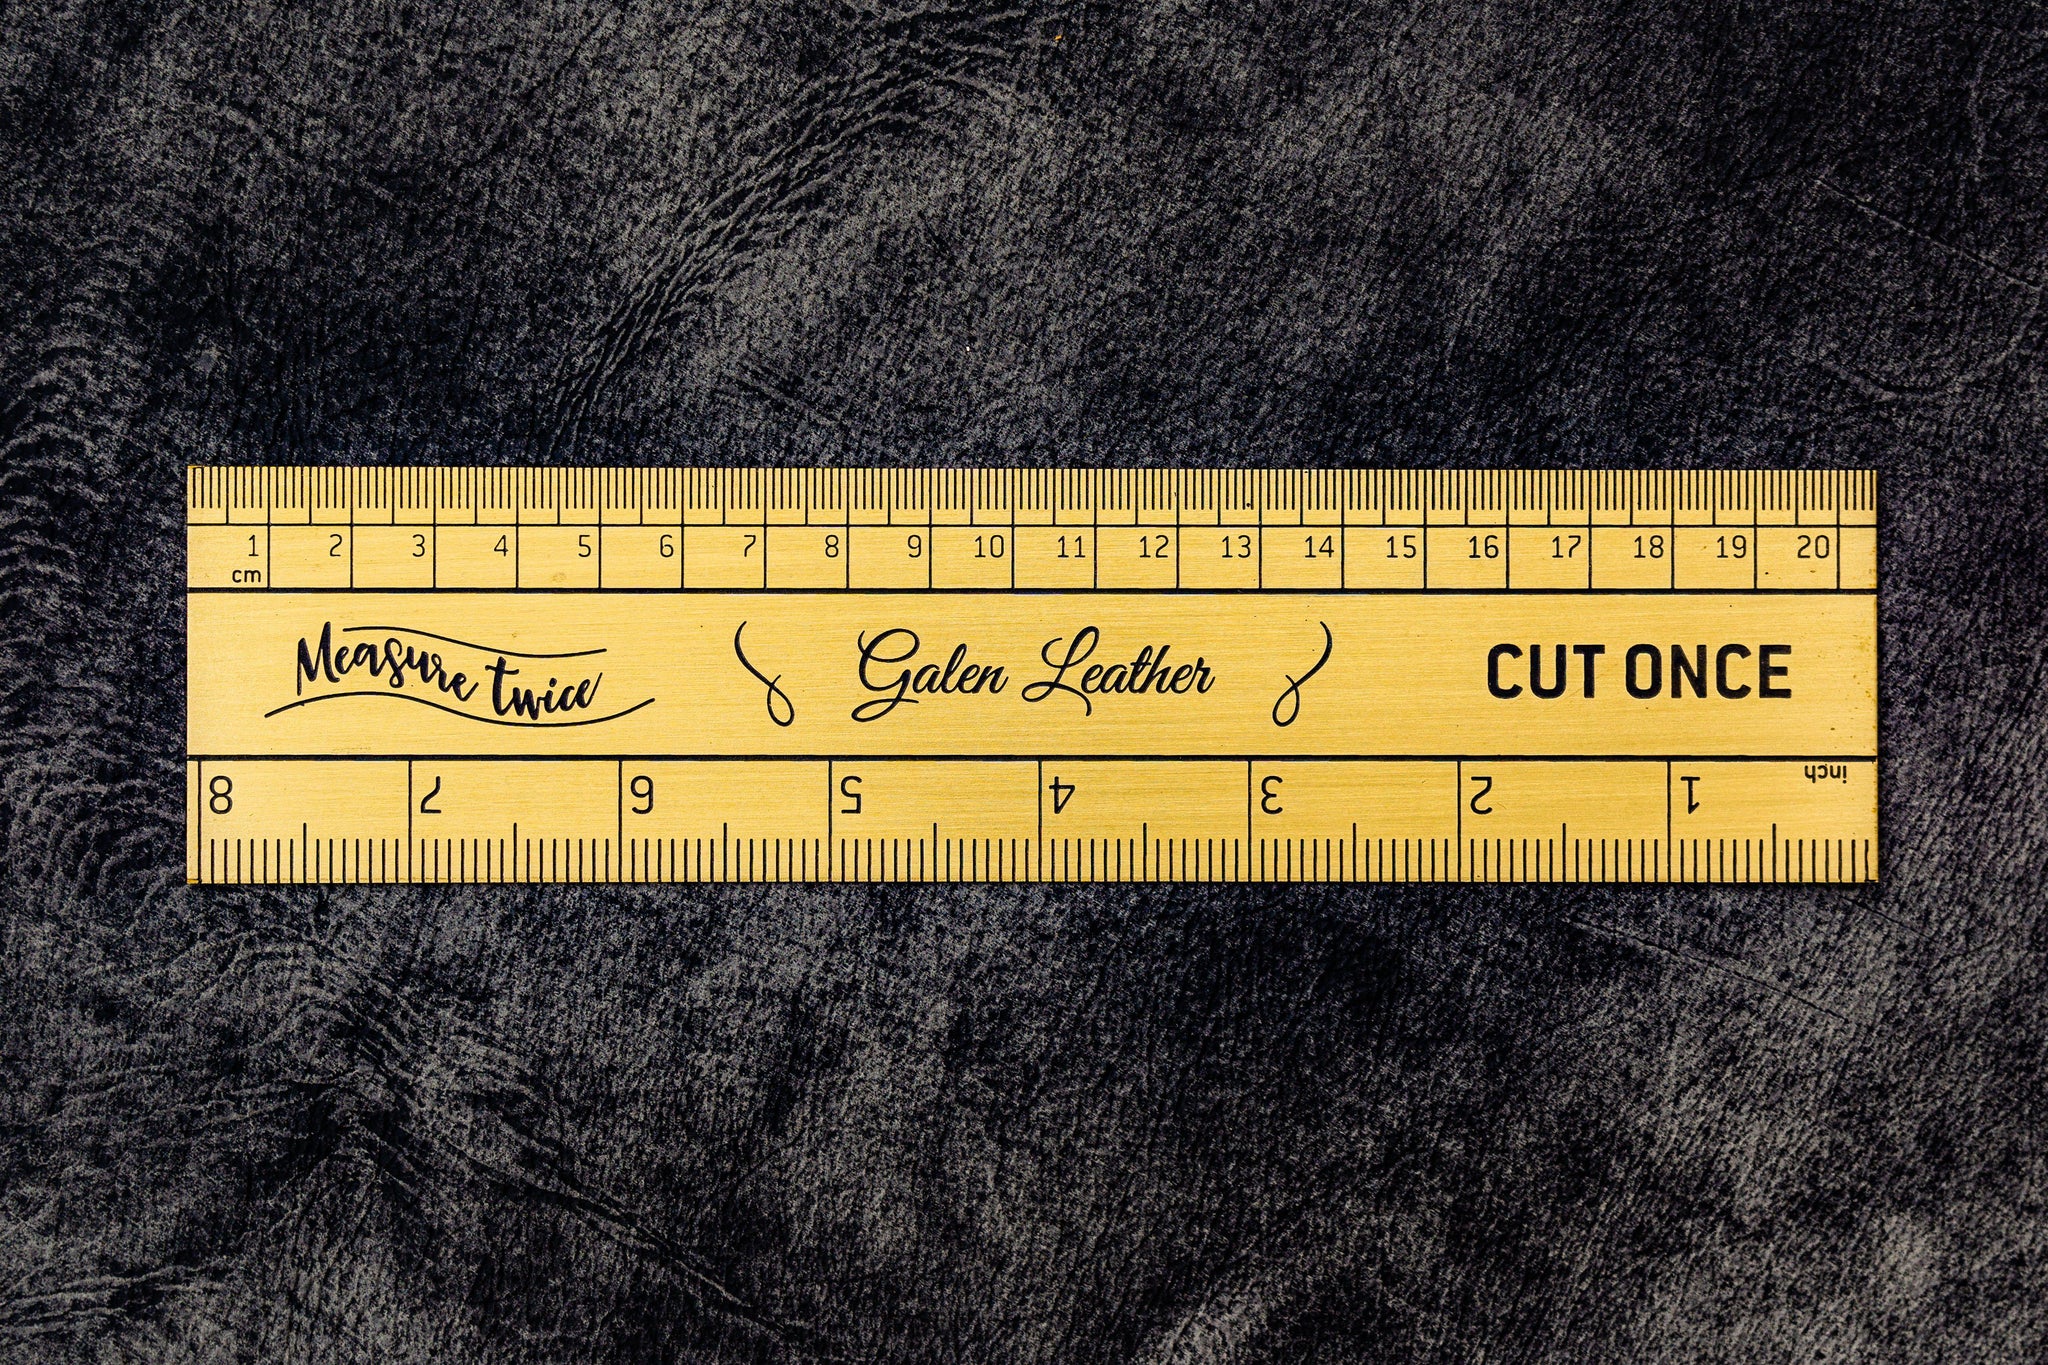 Measuring tape ruler cm numbers 160, Stock image